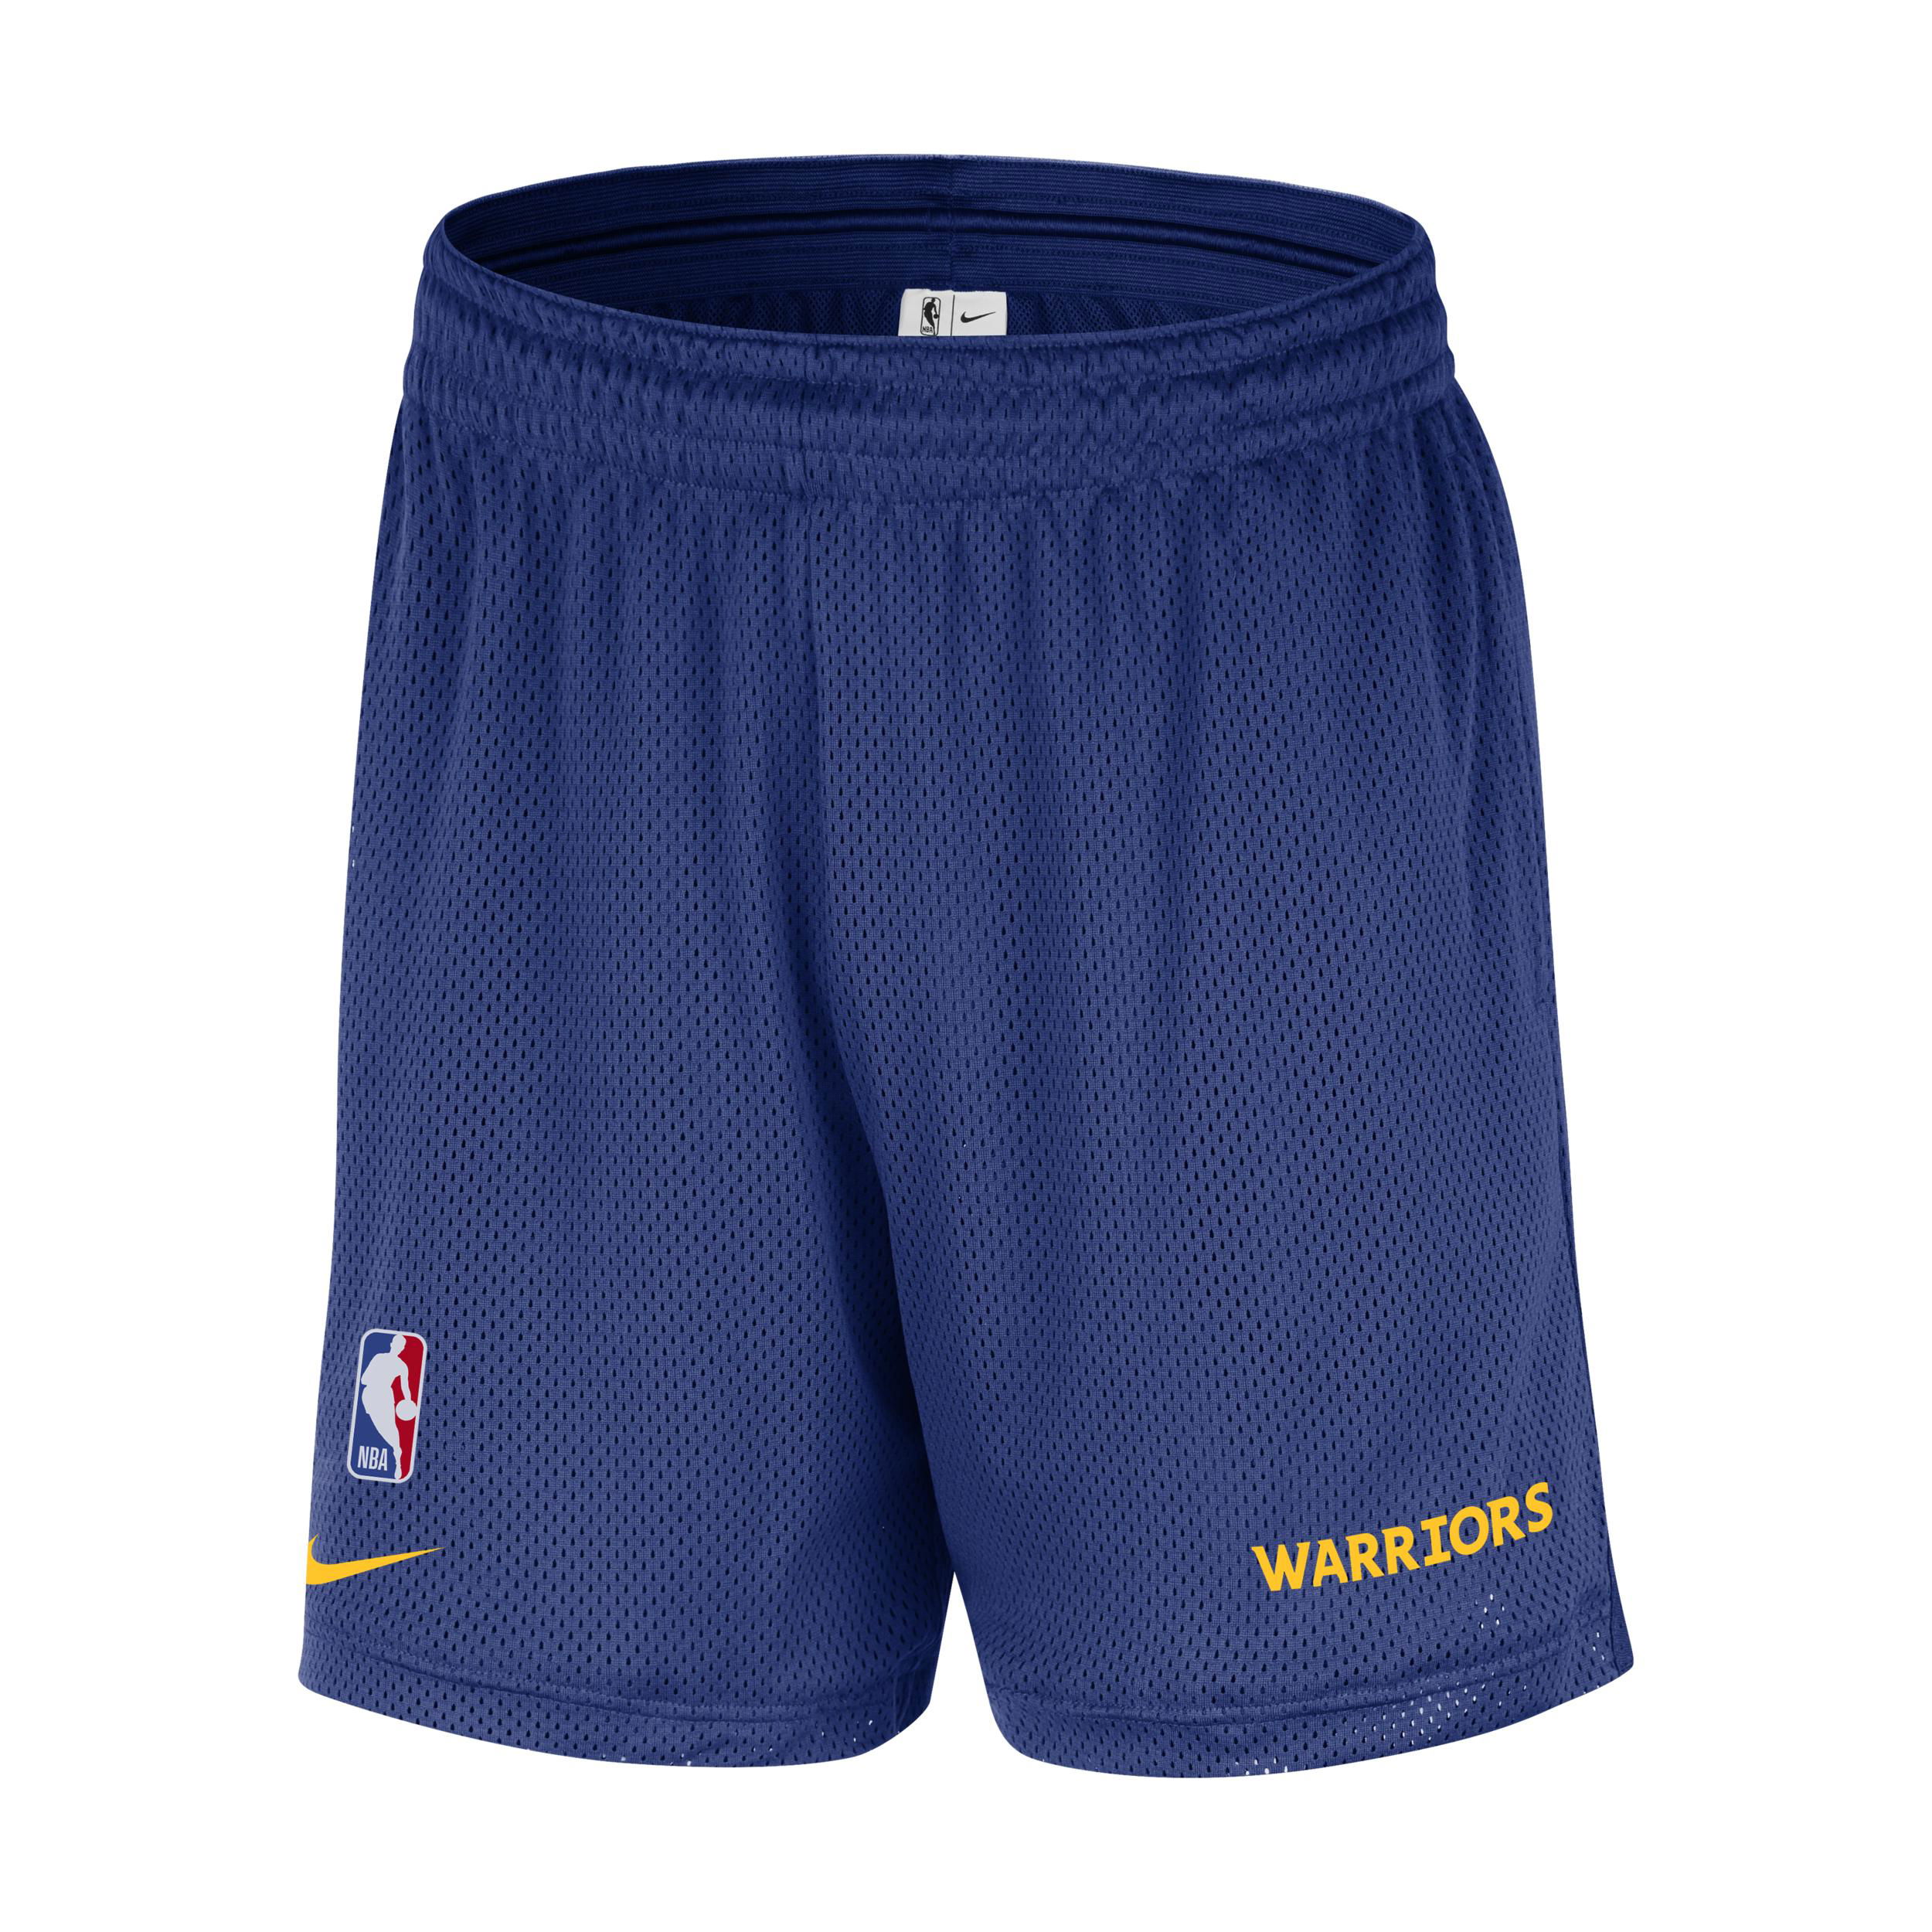 Golden State Warriors Nike Men's NBA Mesh Shorts by NIKE